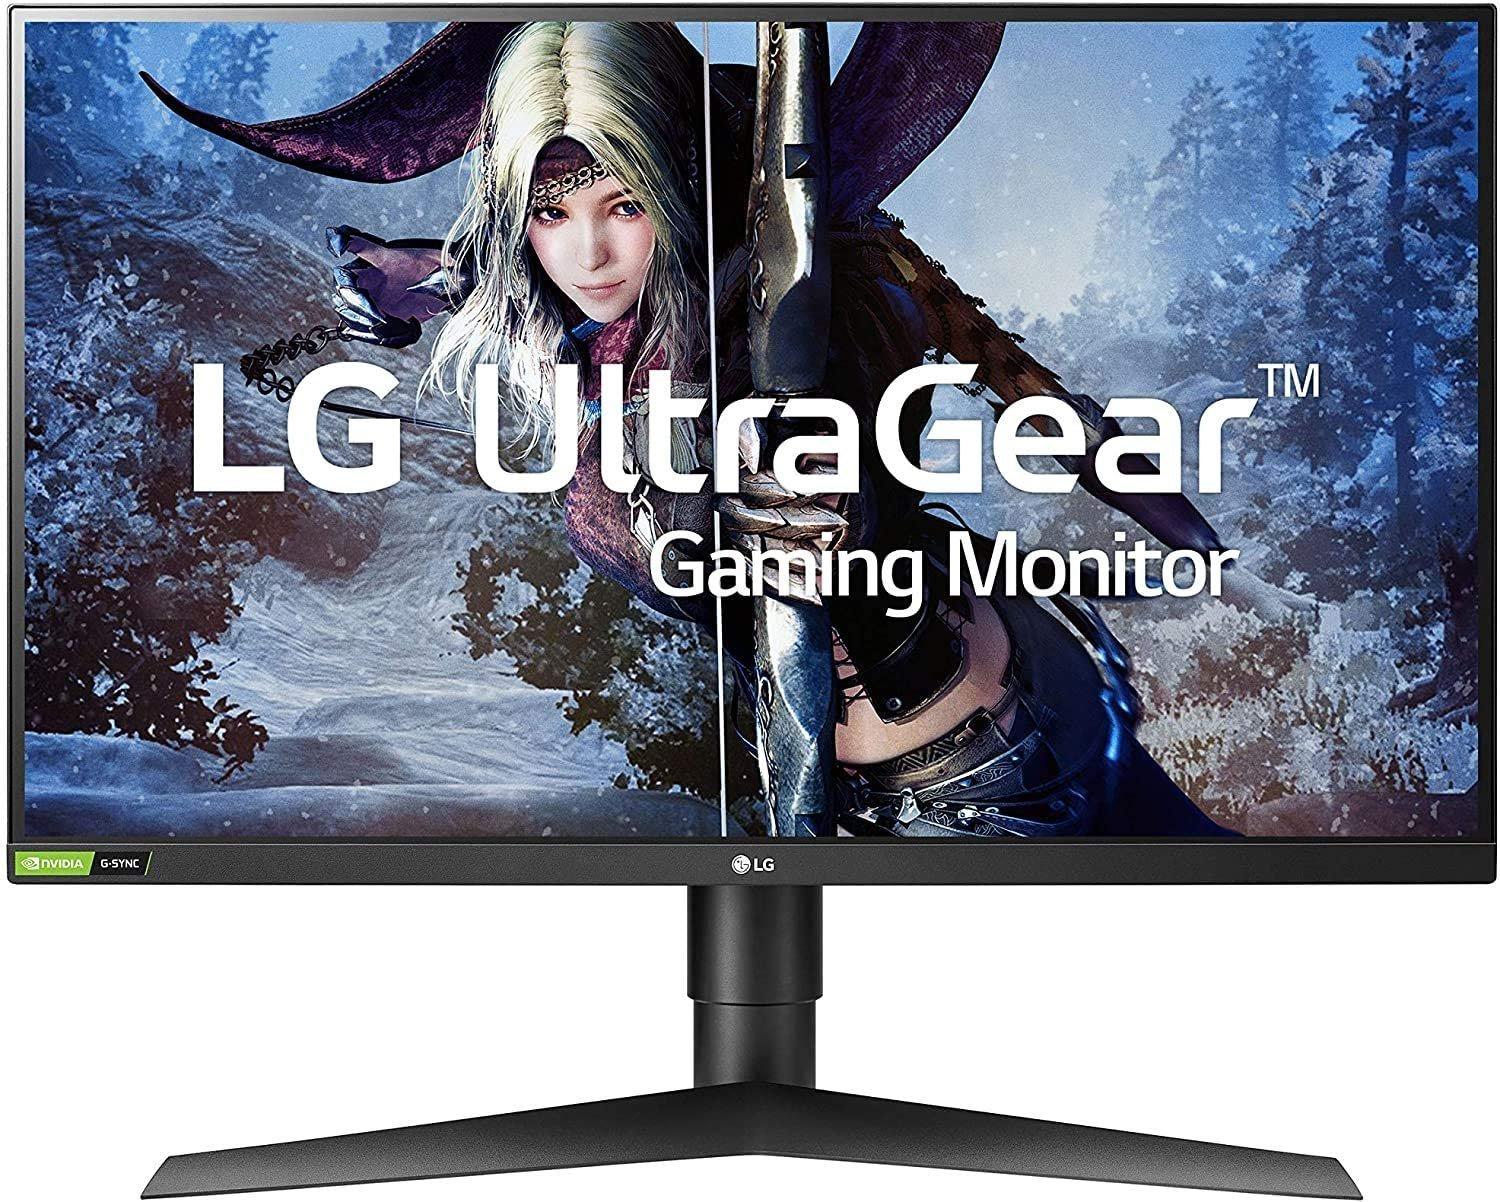 LG UltraGear 27in 2560x1440 144Hz 1ms Nano IPS Gaming Monitor